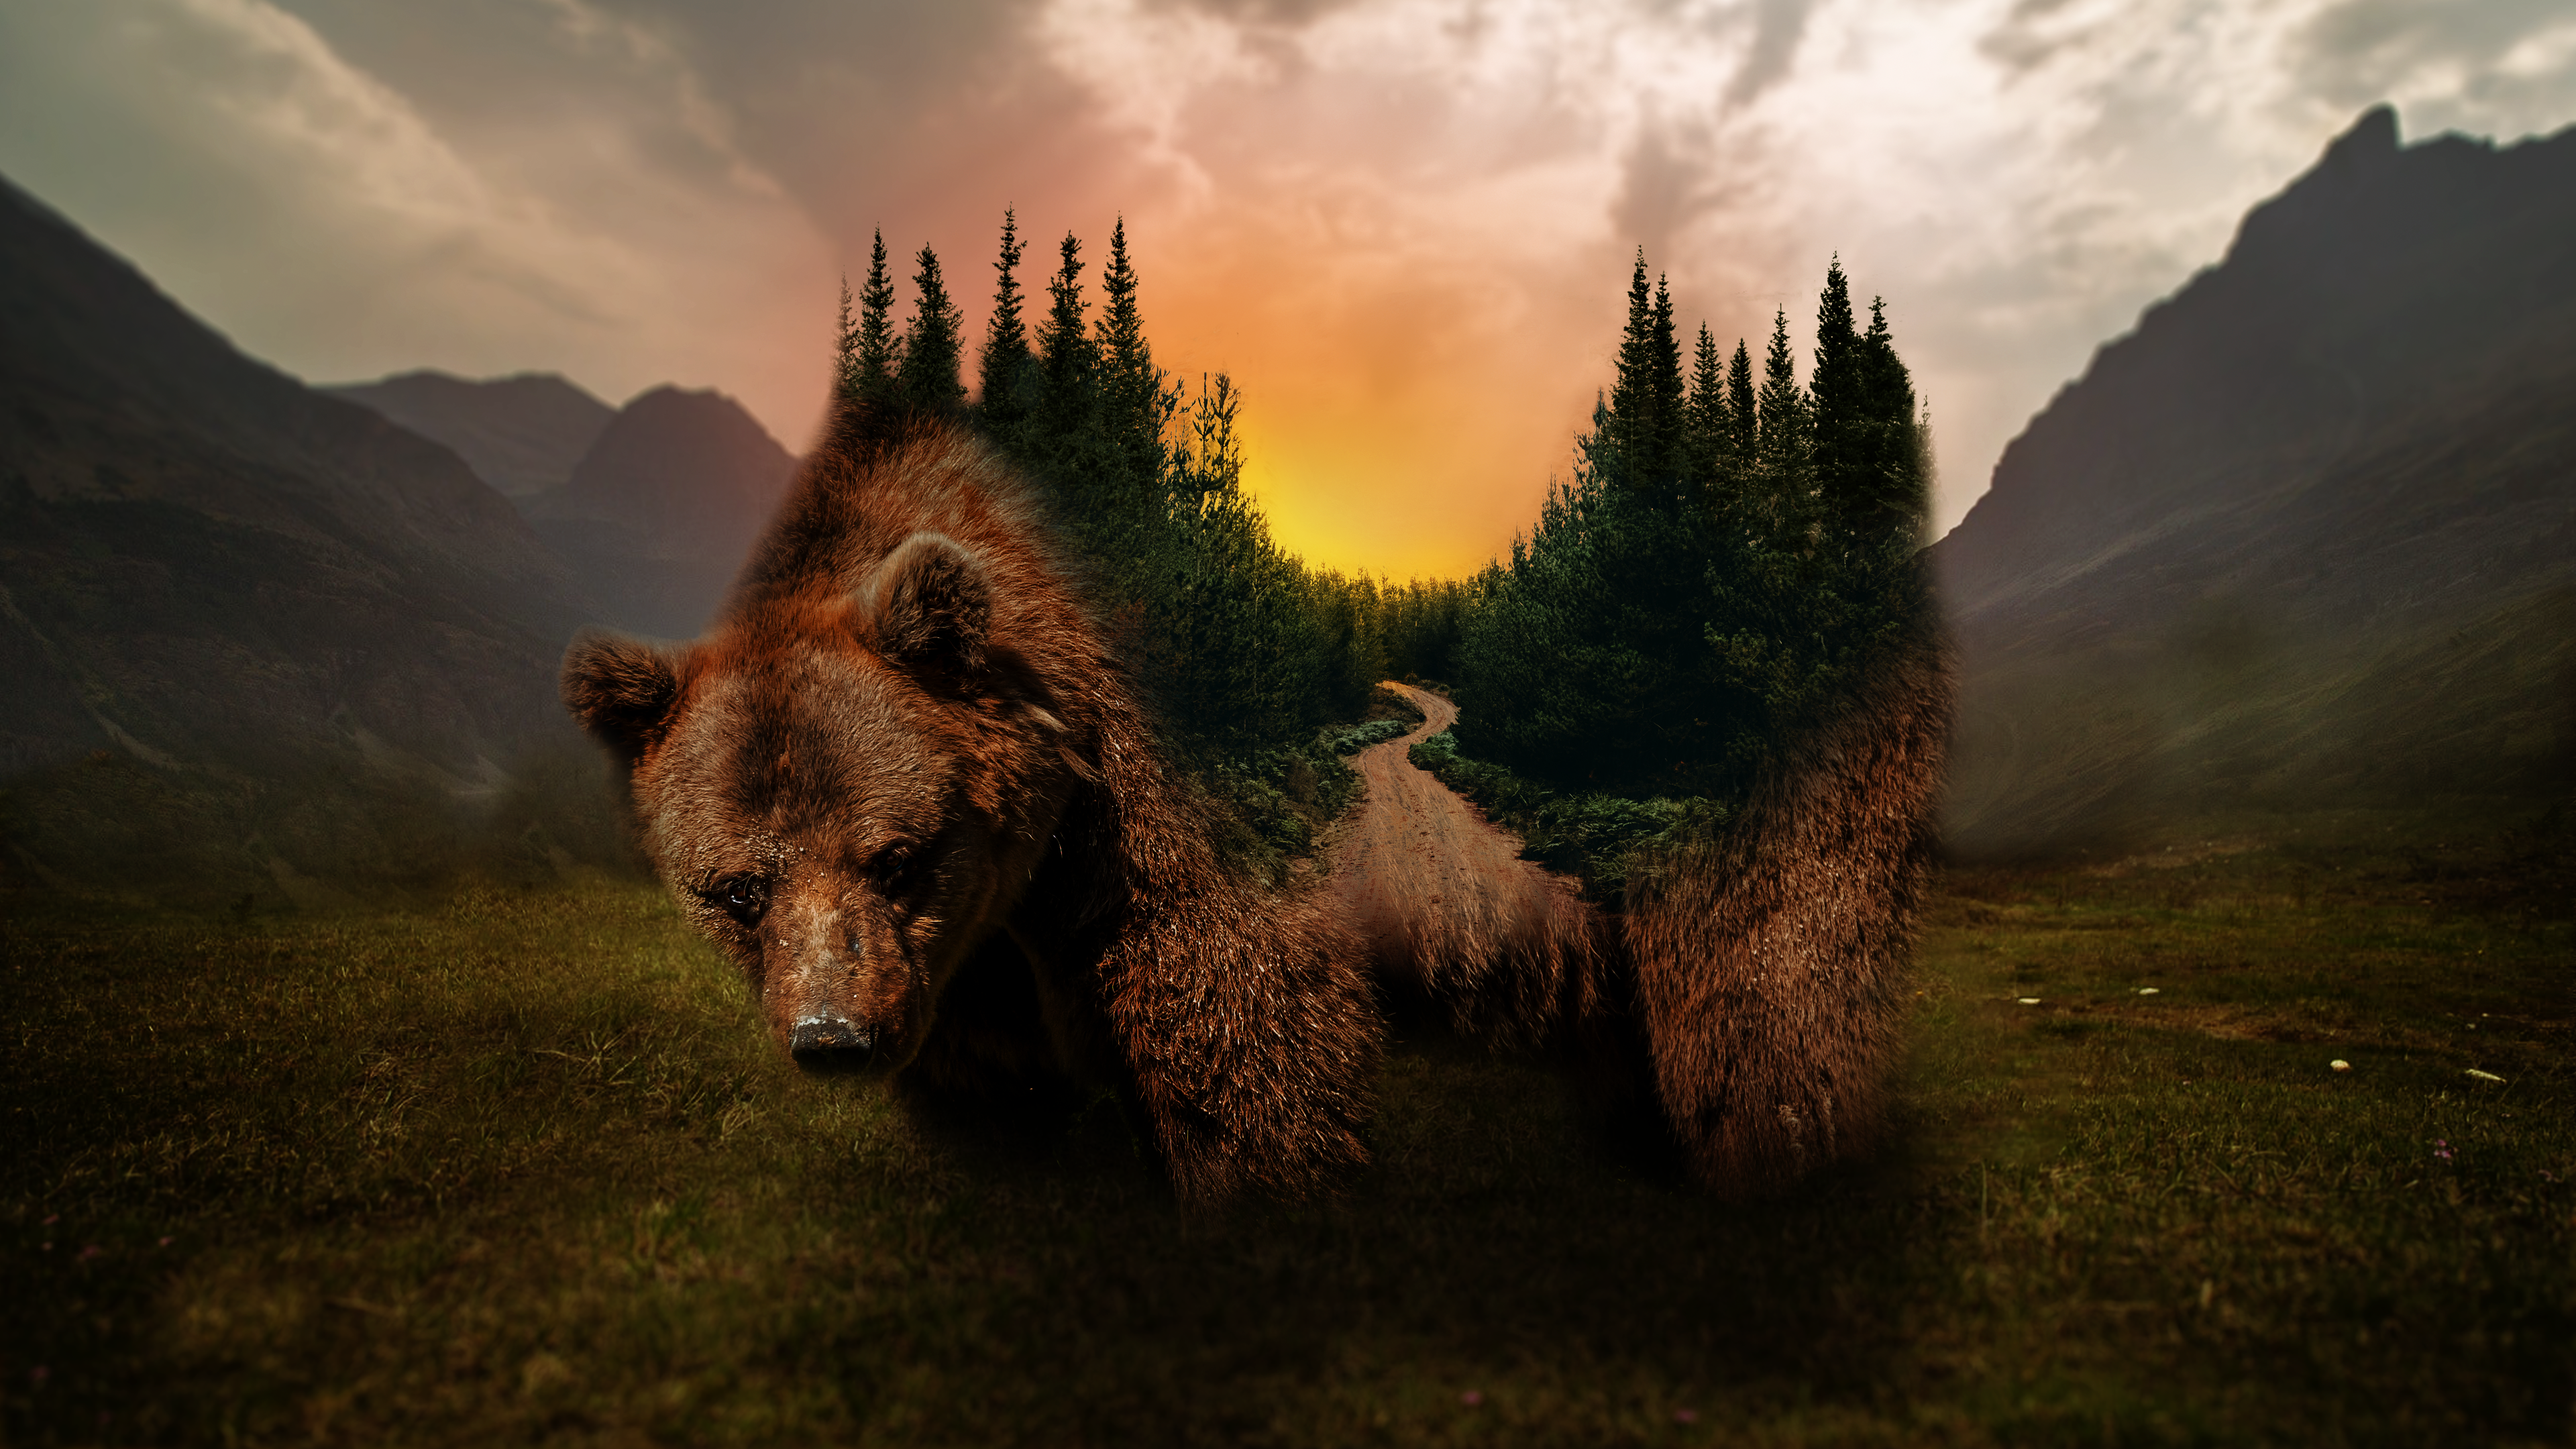 Grizzly Bear Forest Sunset Nature Digital Art Wallpaper:3840x2160